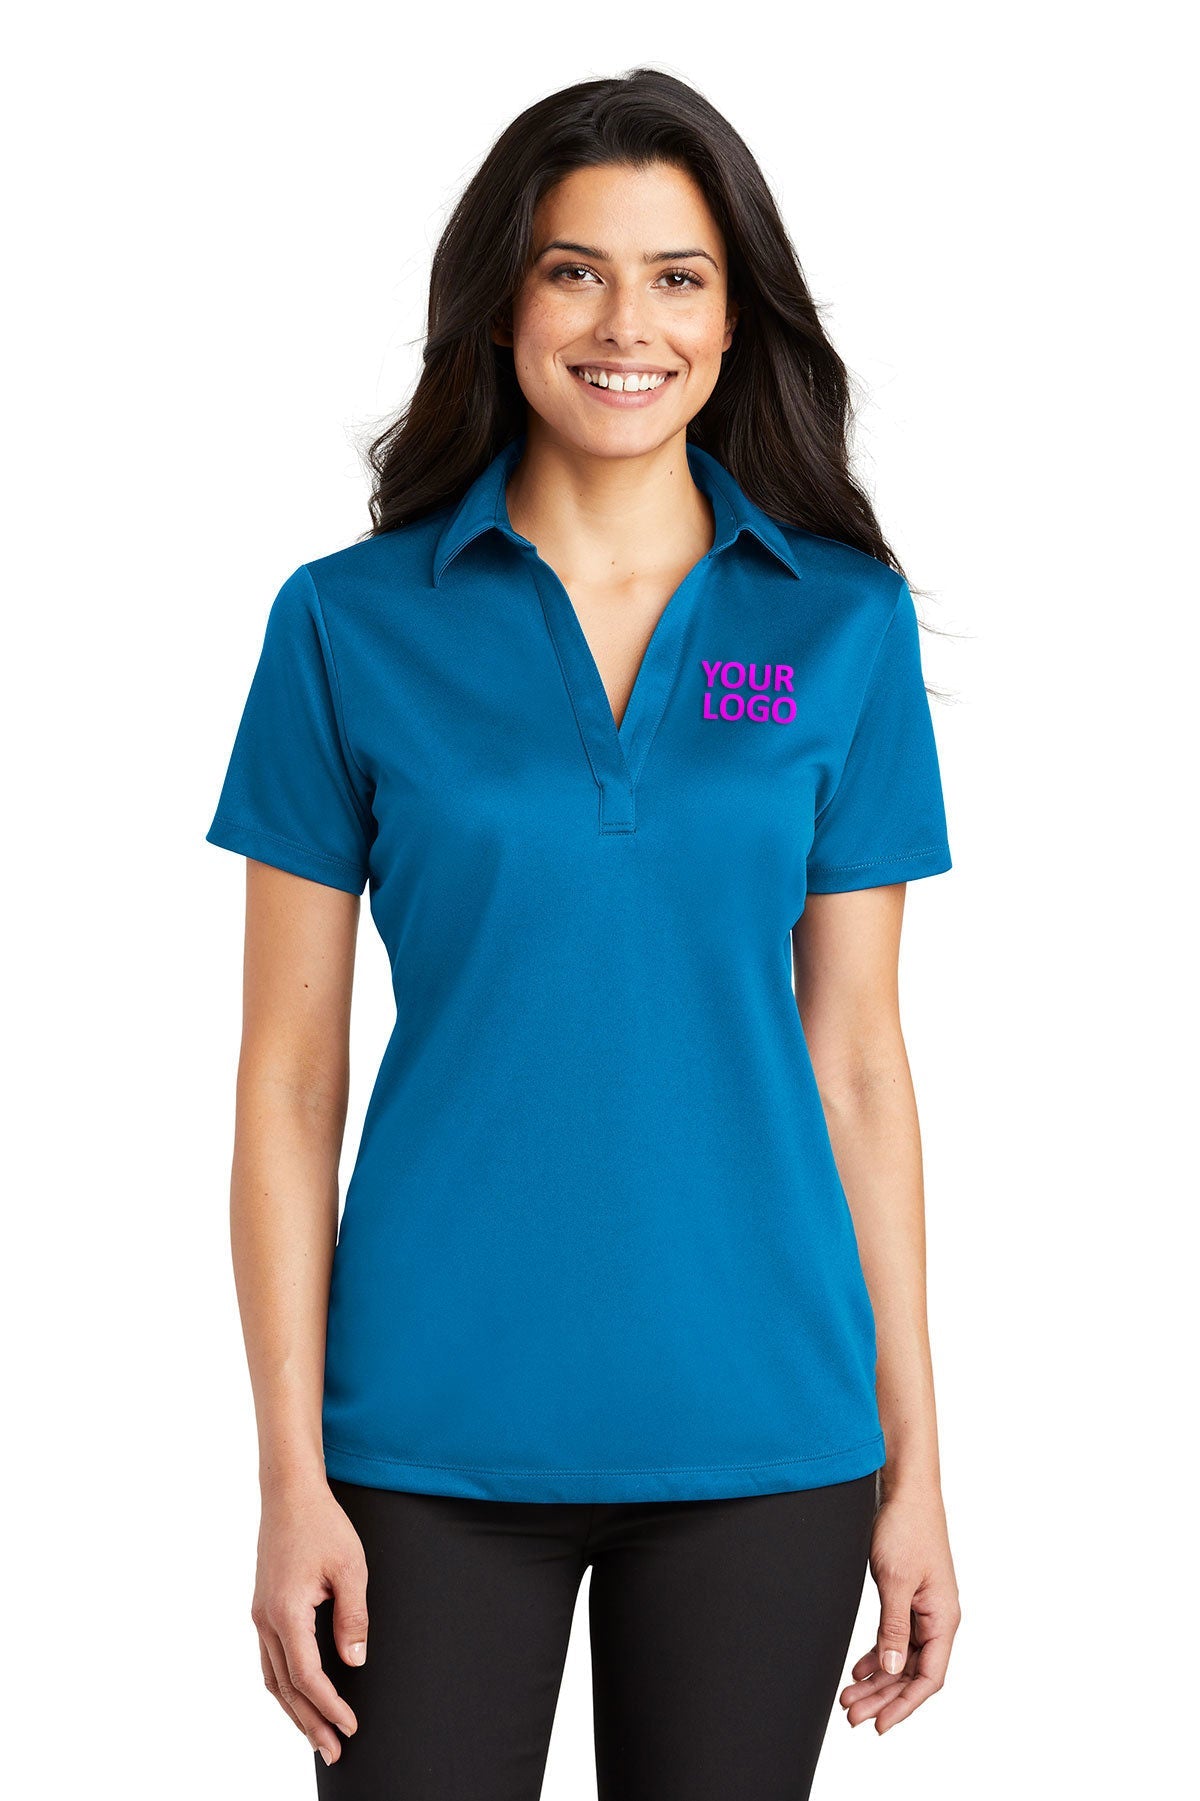 port authority brilliant blue l540 custom polo shirts for work